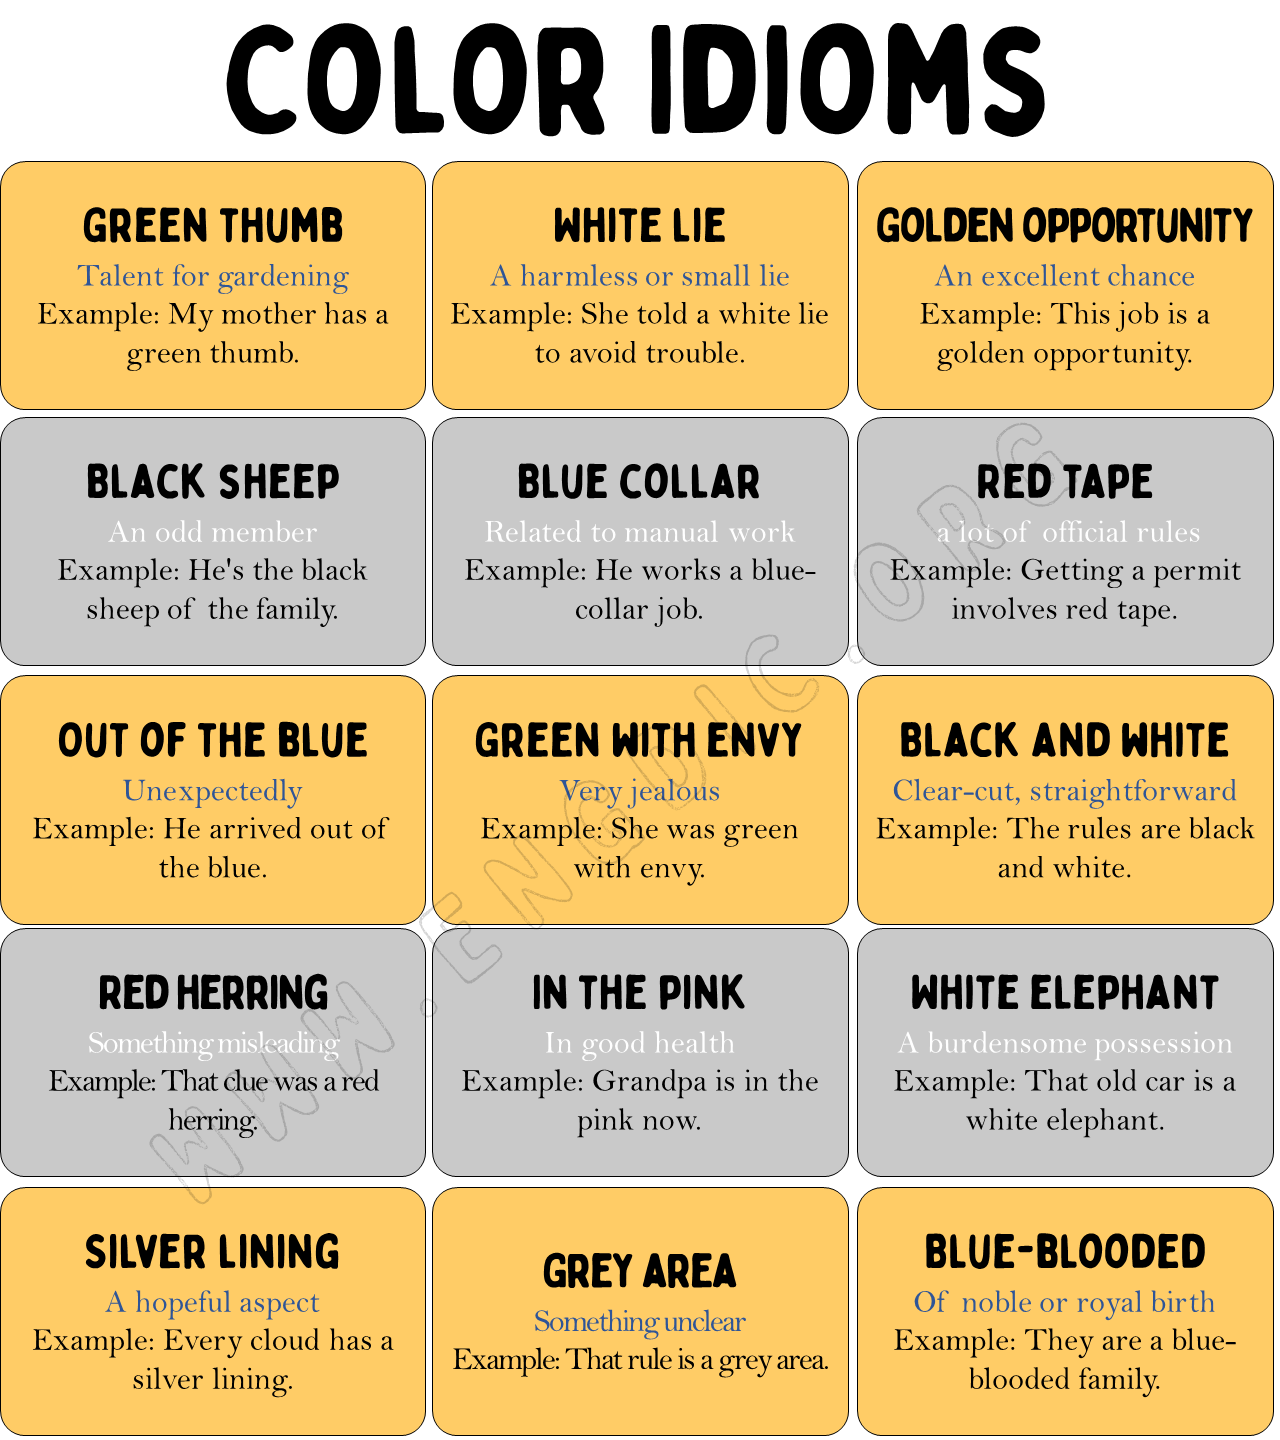 Color Idioms